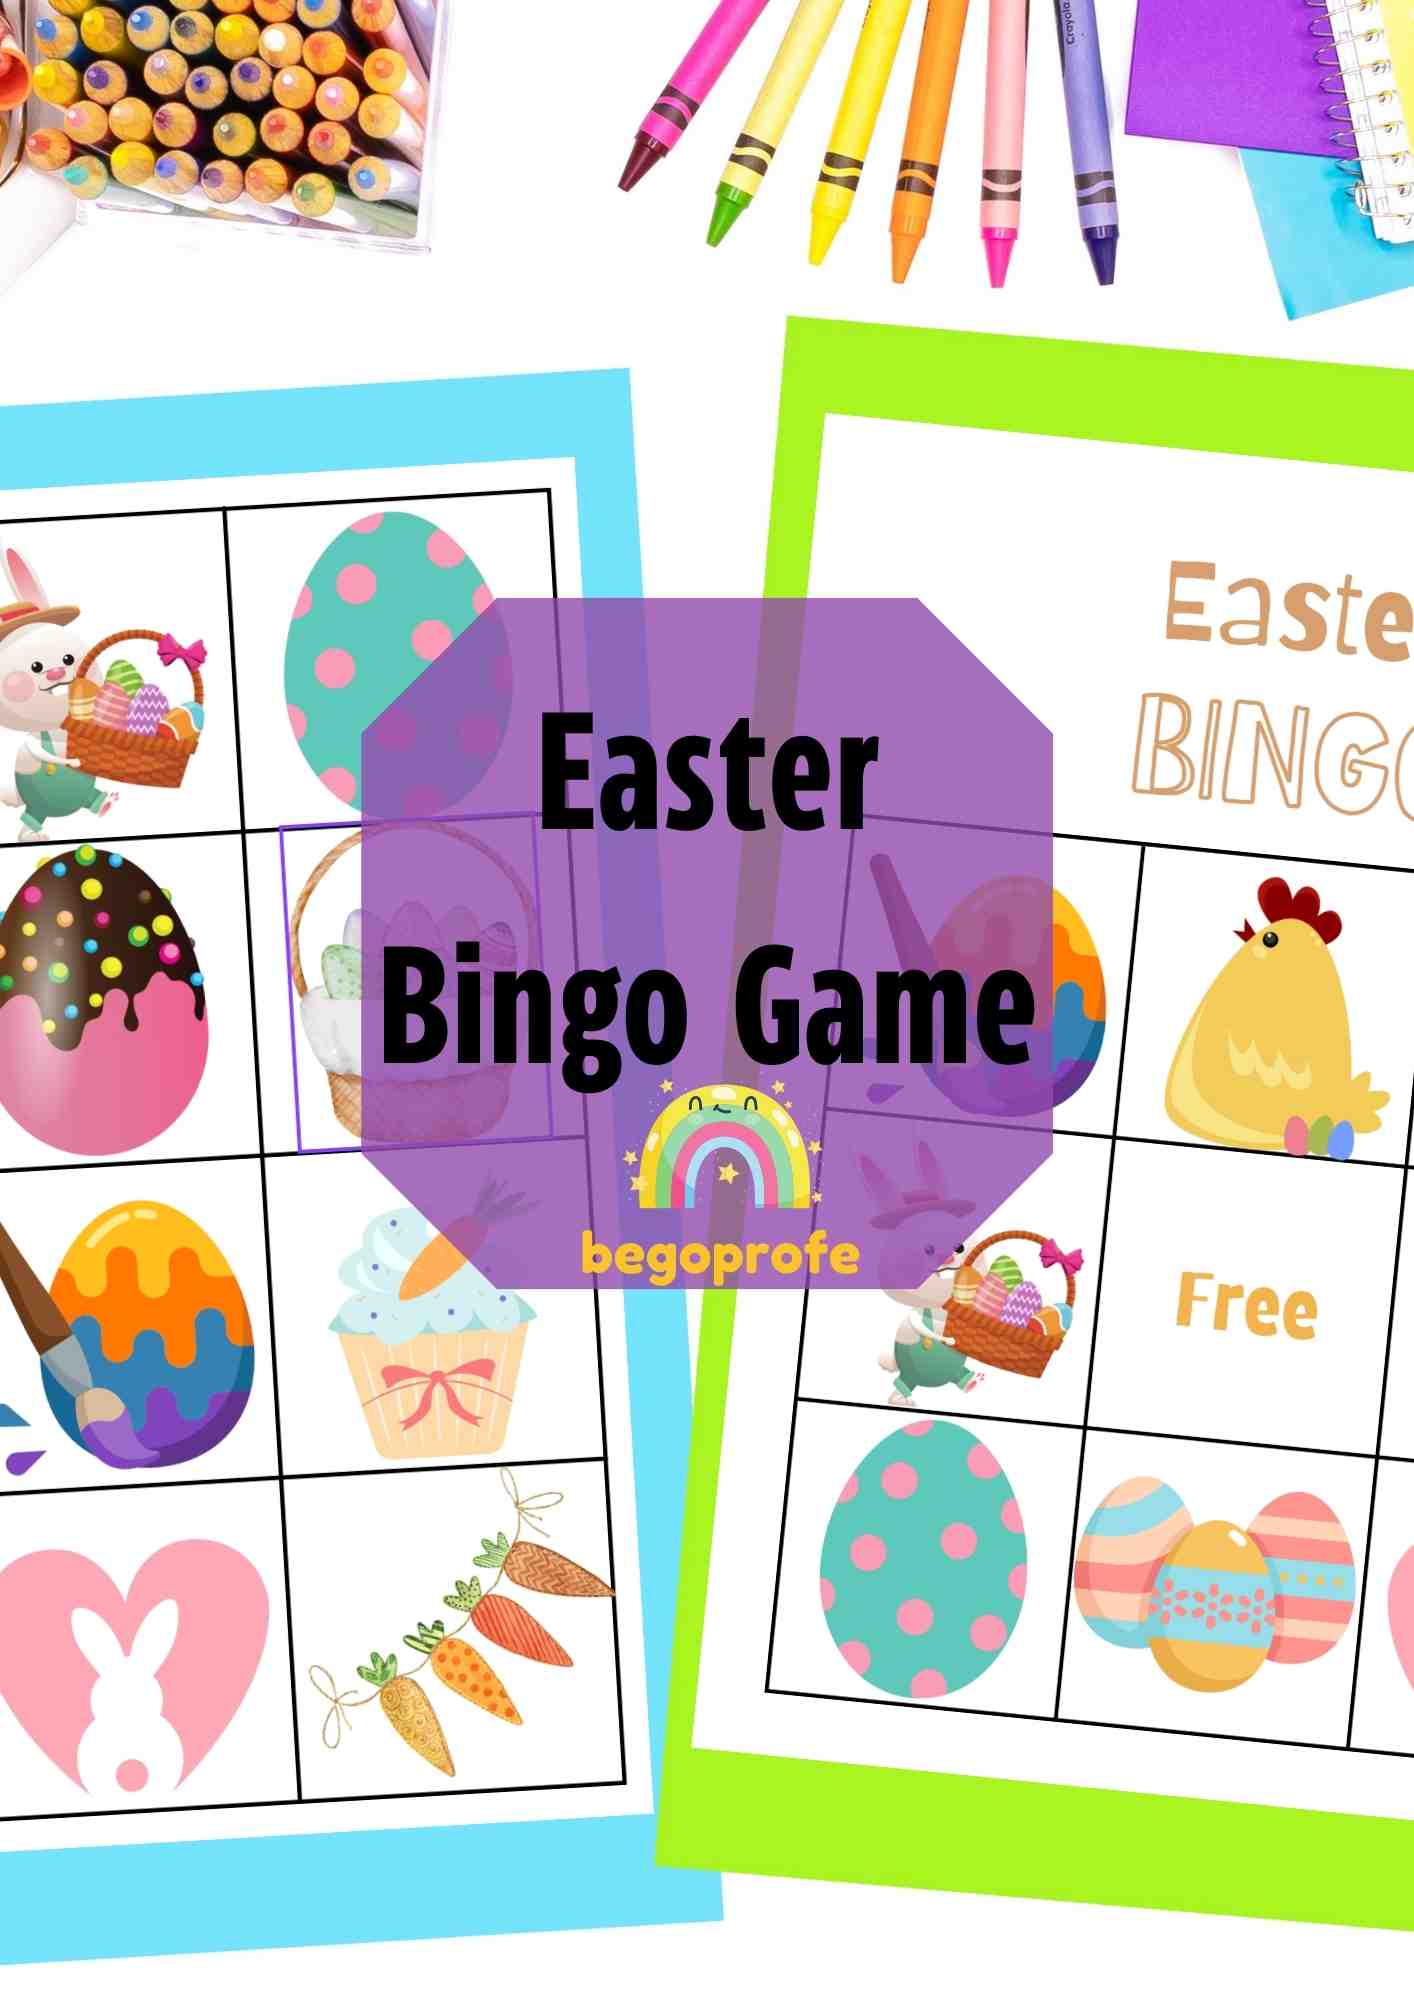 Easter bingo game - Bingo de Pascua